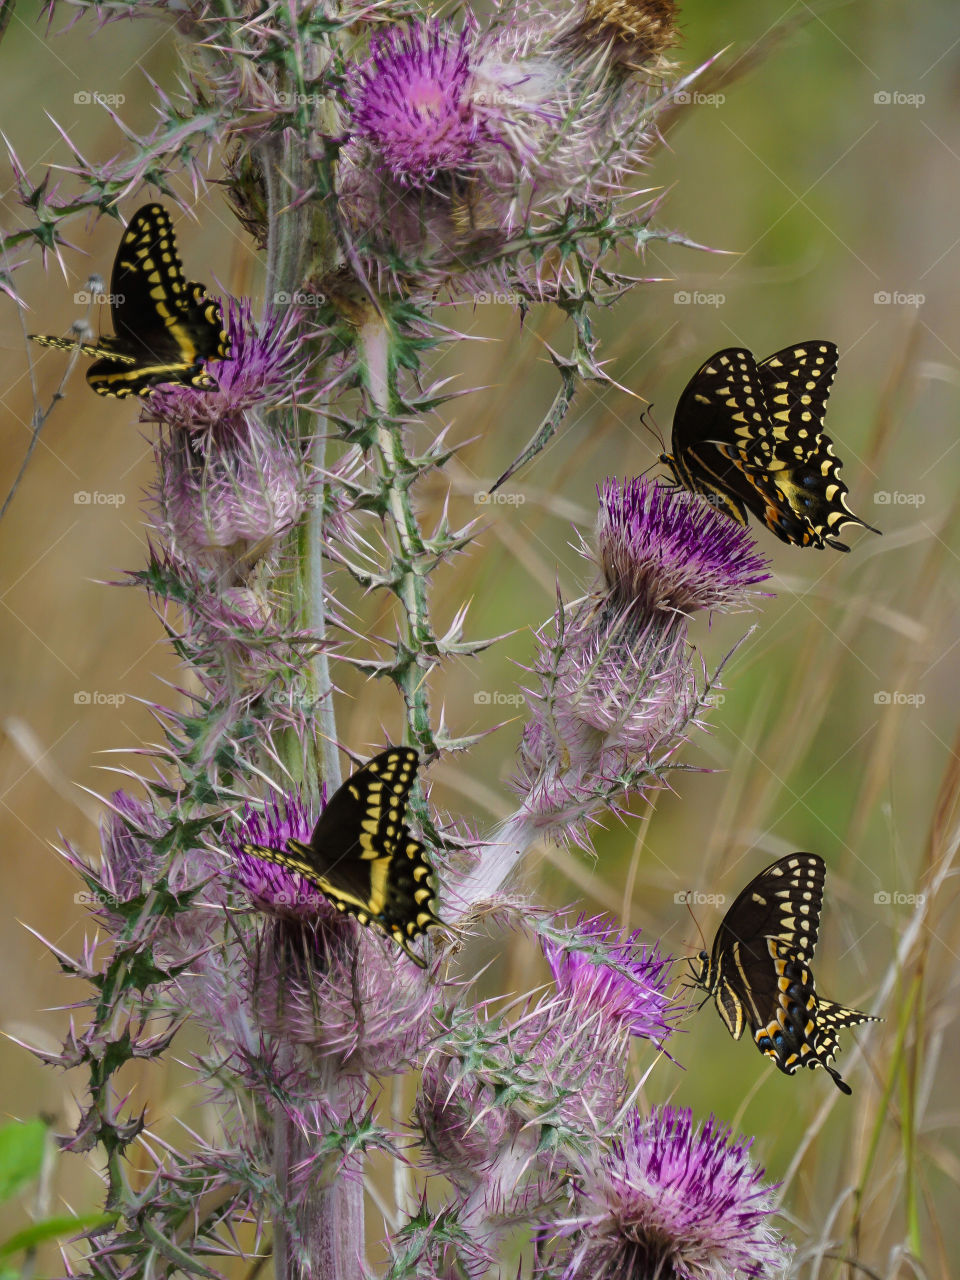 Swallowtail Butterfly on purple thistle